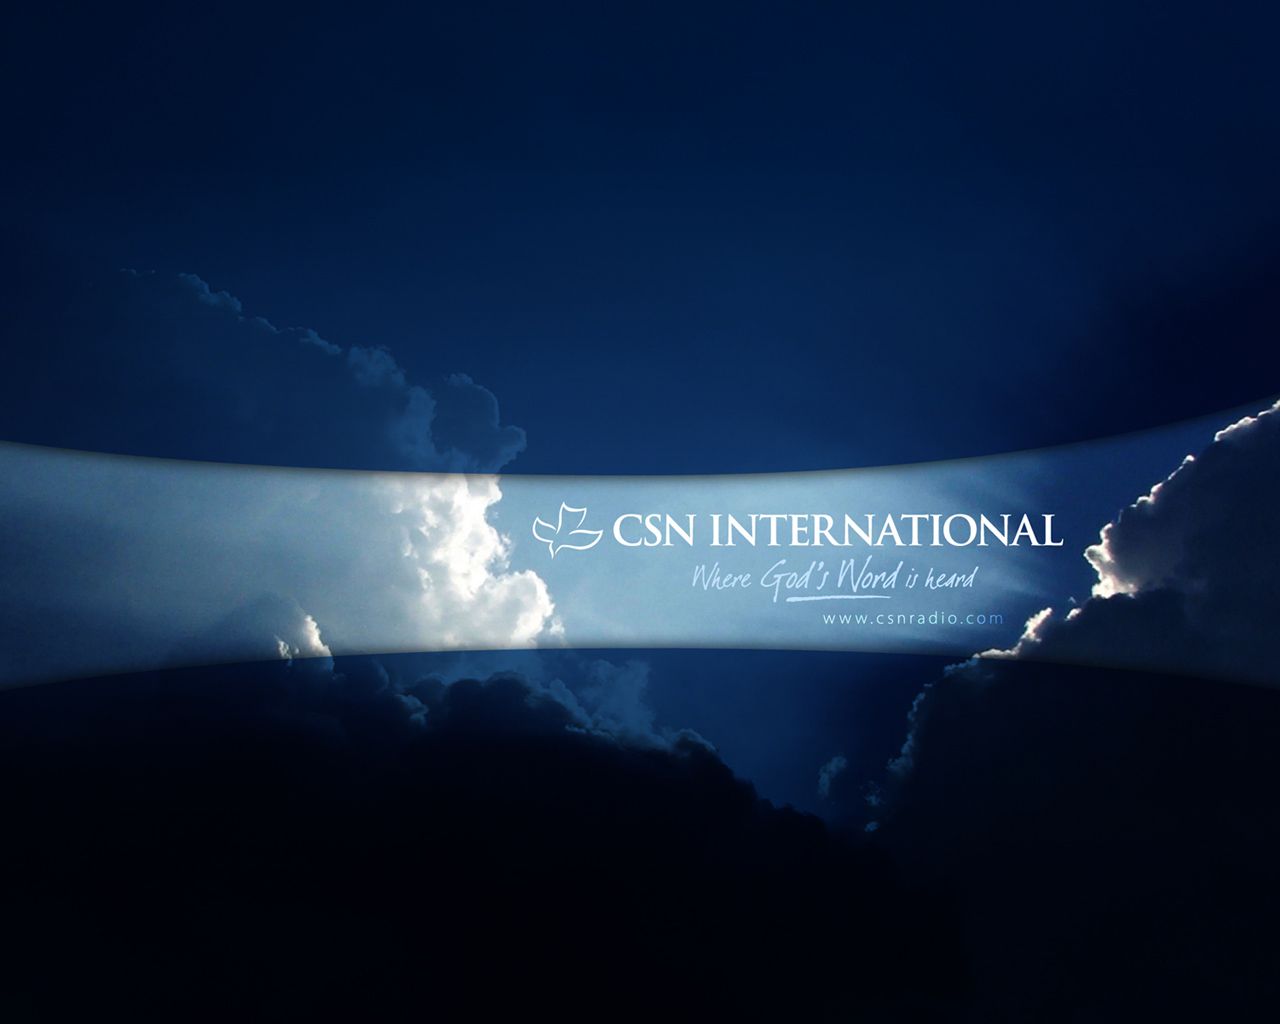 Csn International Wallpaper Christian And Background